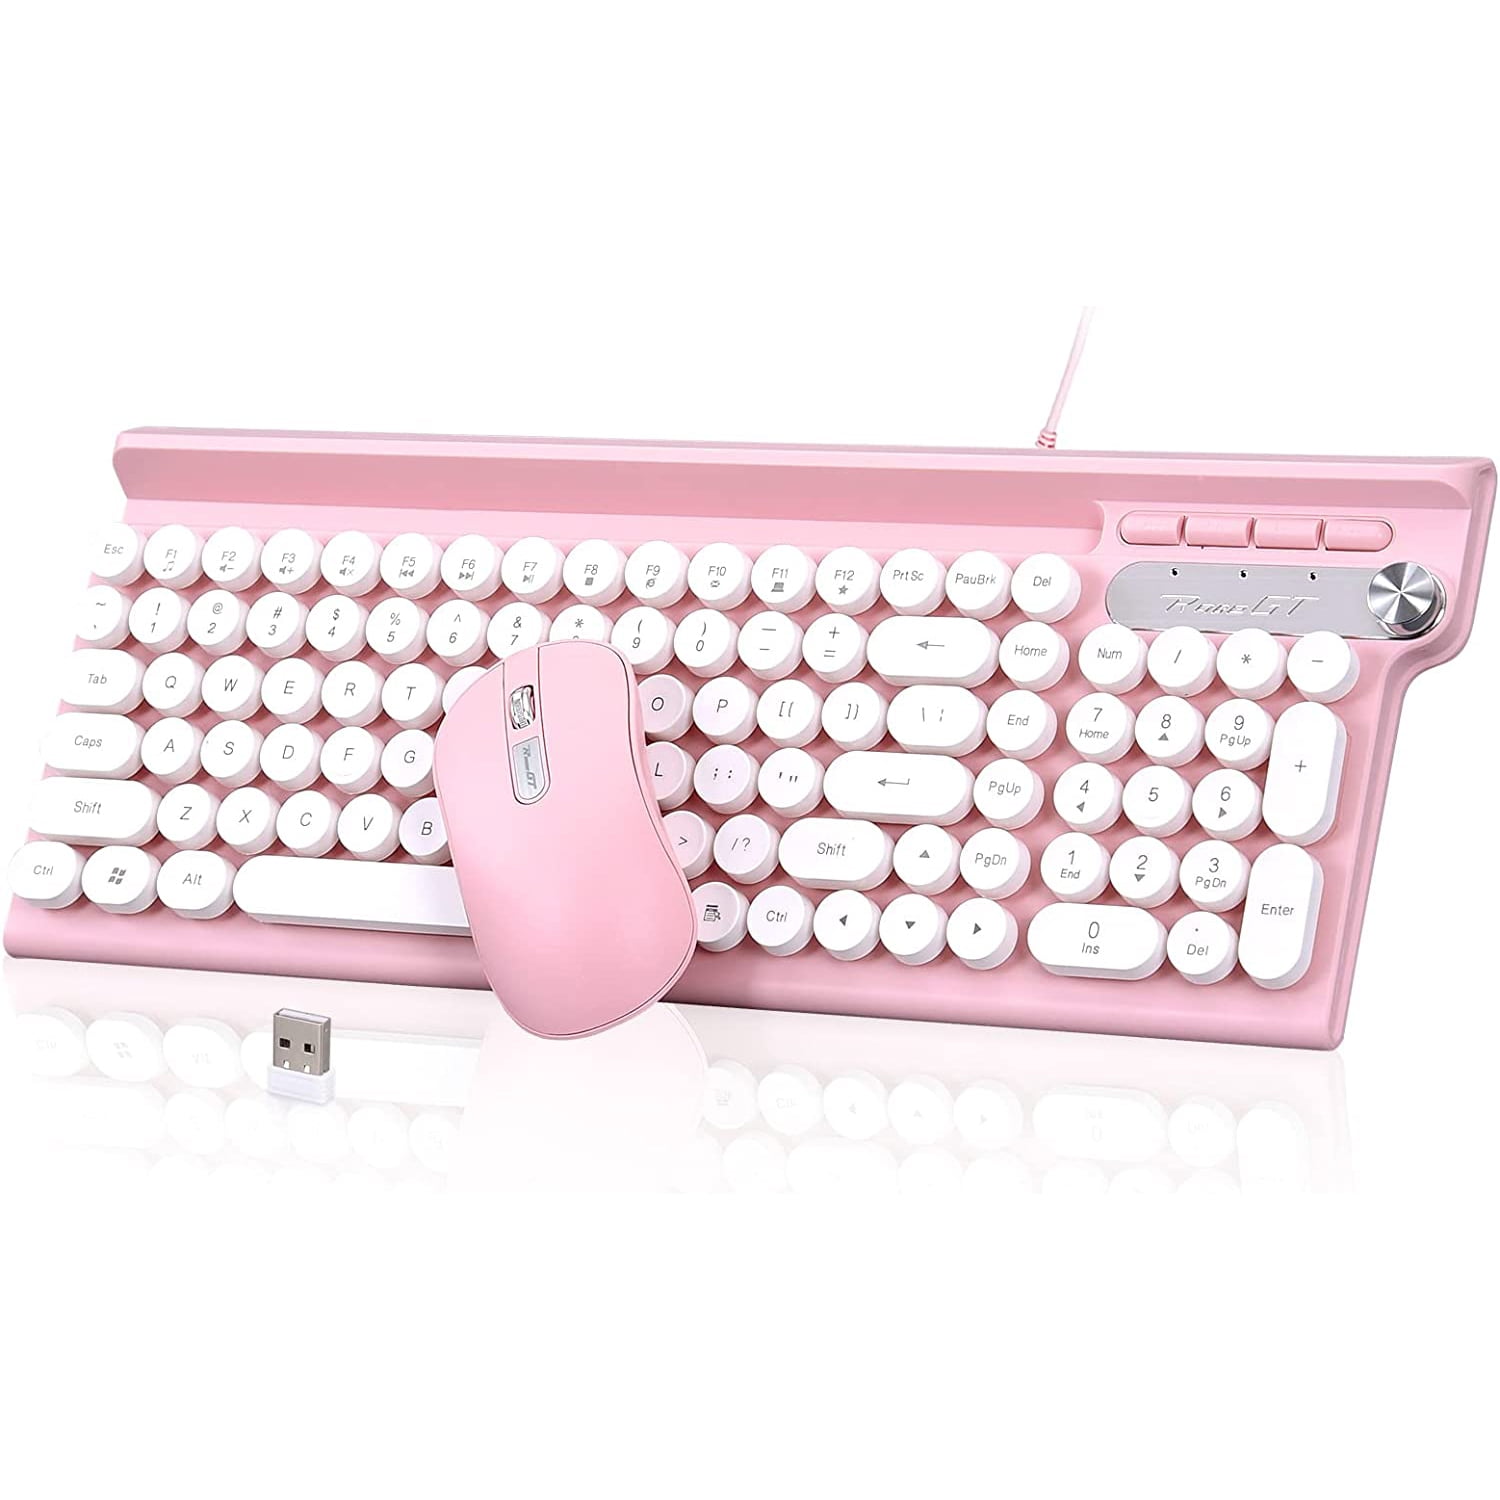 Mofii 666 Wireless Keyboard Mouse Combo,2.4G Colored keyboard ,110 